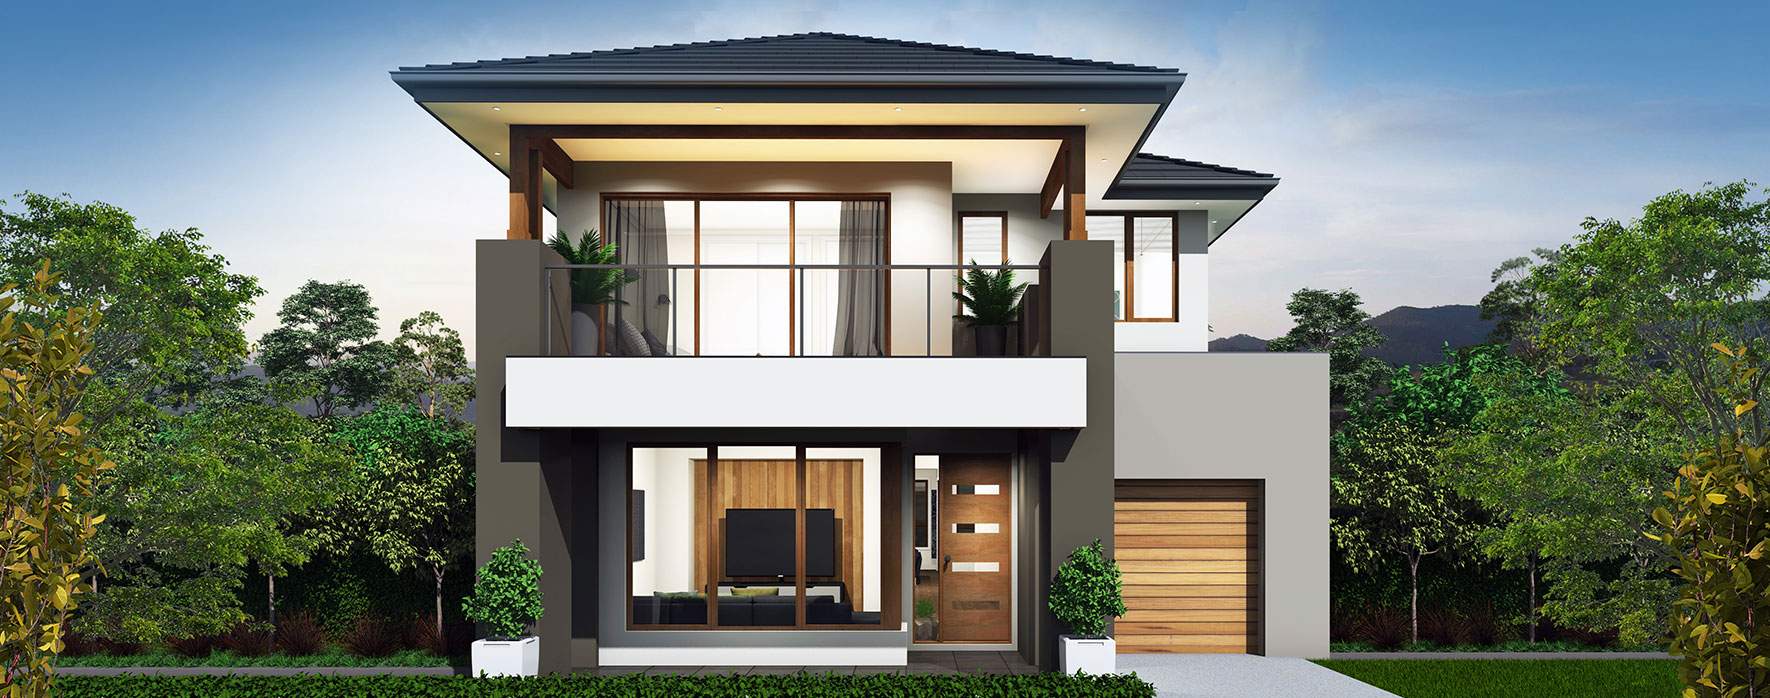 double-storey-motion-house-design-grande